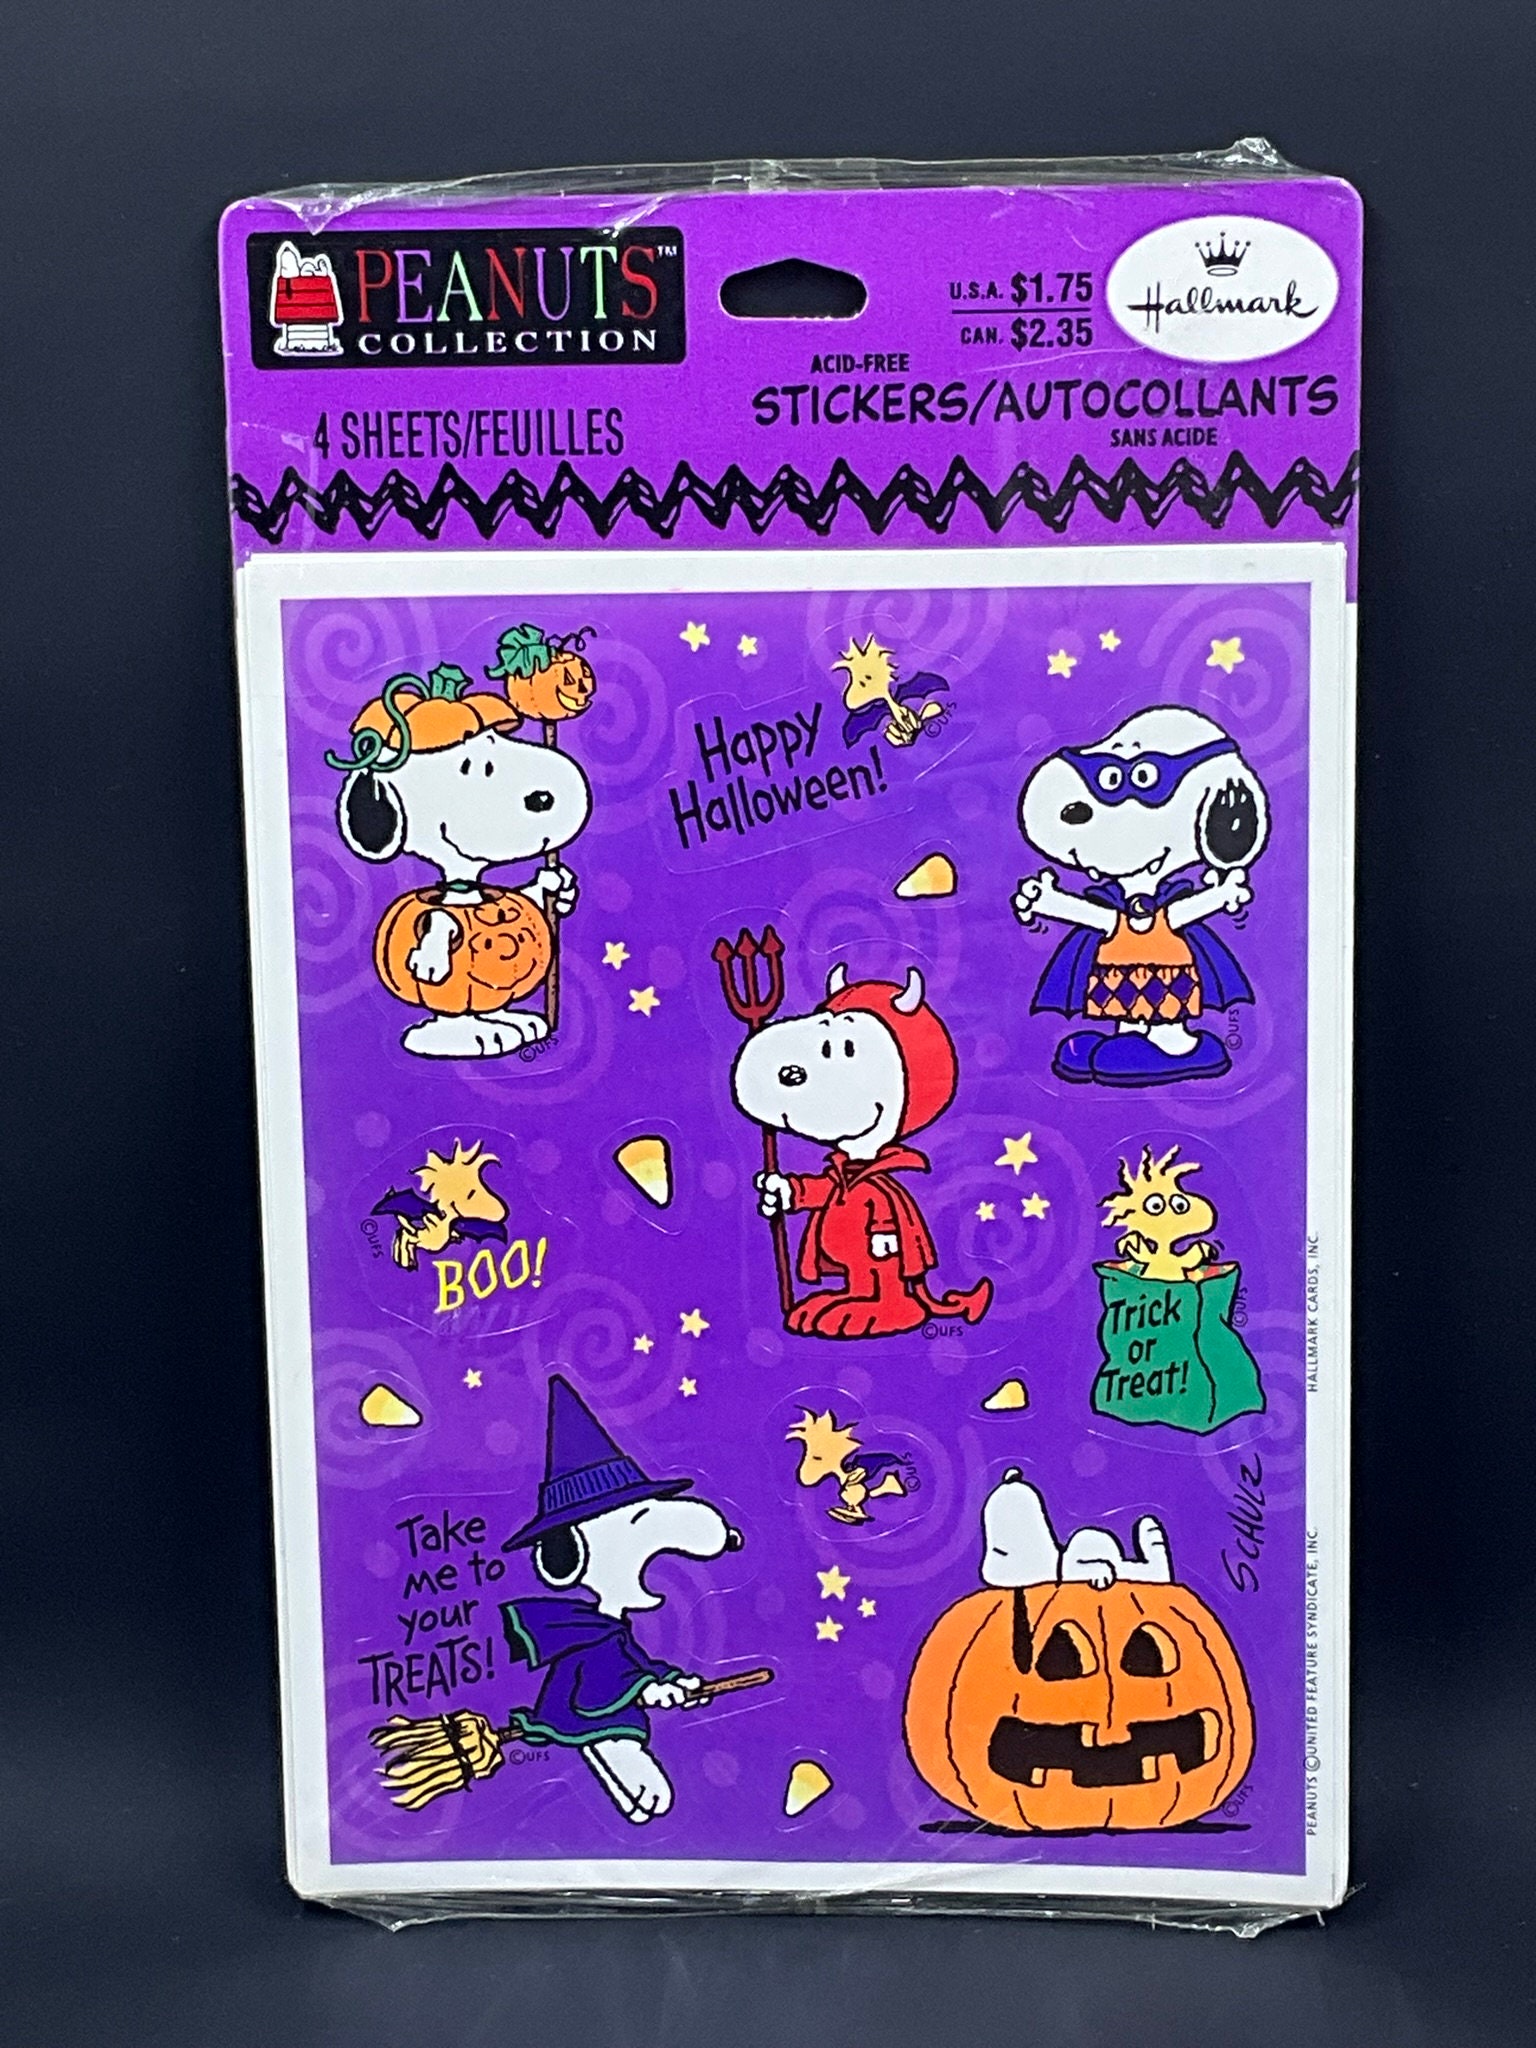 Hallmark Vintage Giant Snoopy Sticker - RARE!